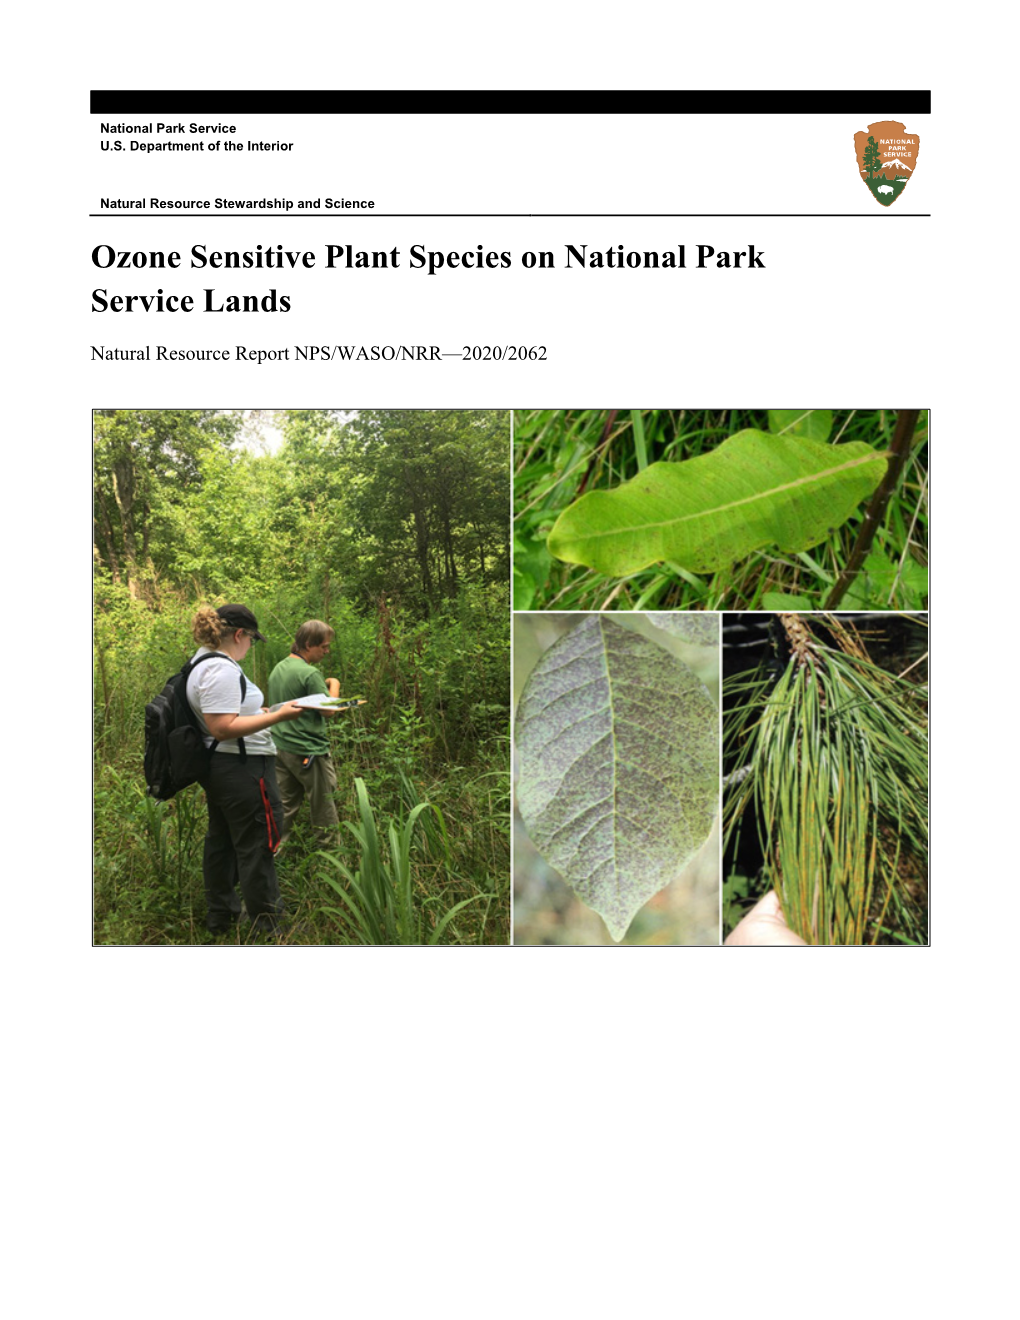 Ozone Sensitive Plant Species on National Park Service Lands